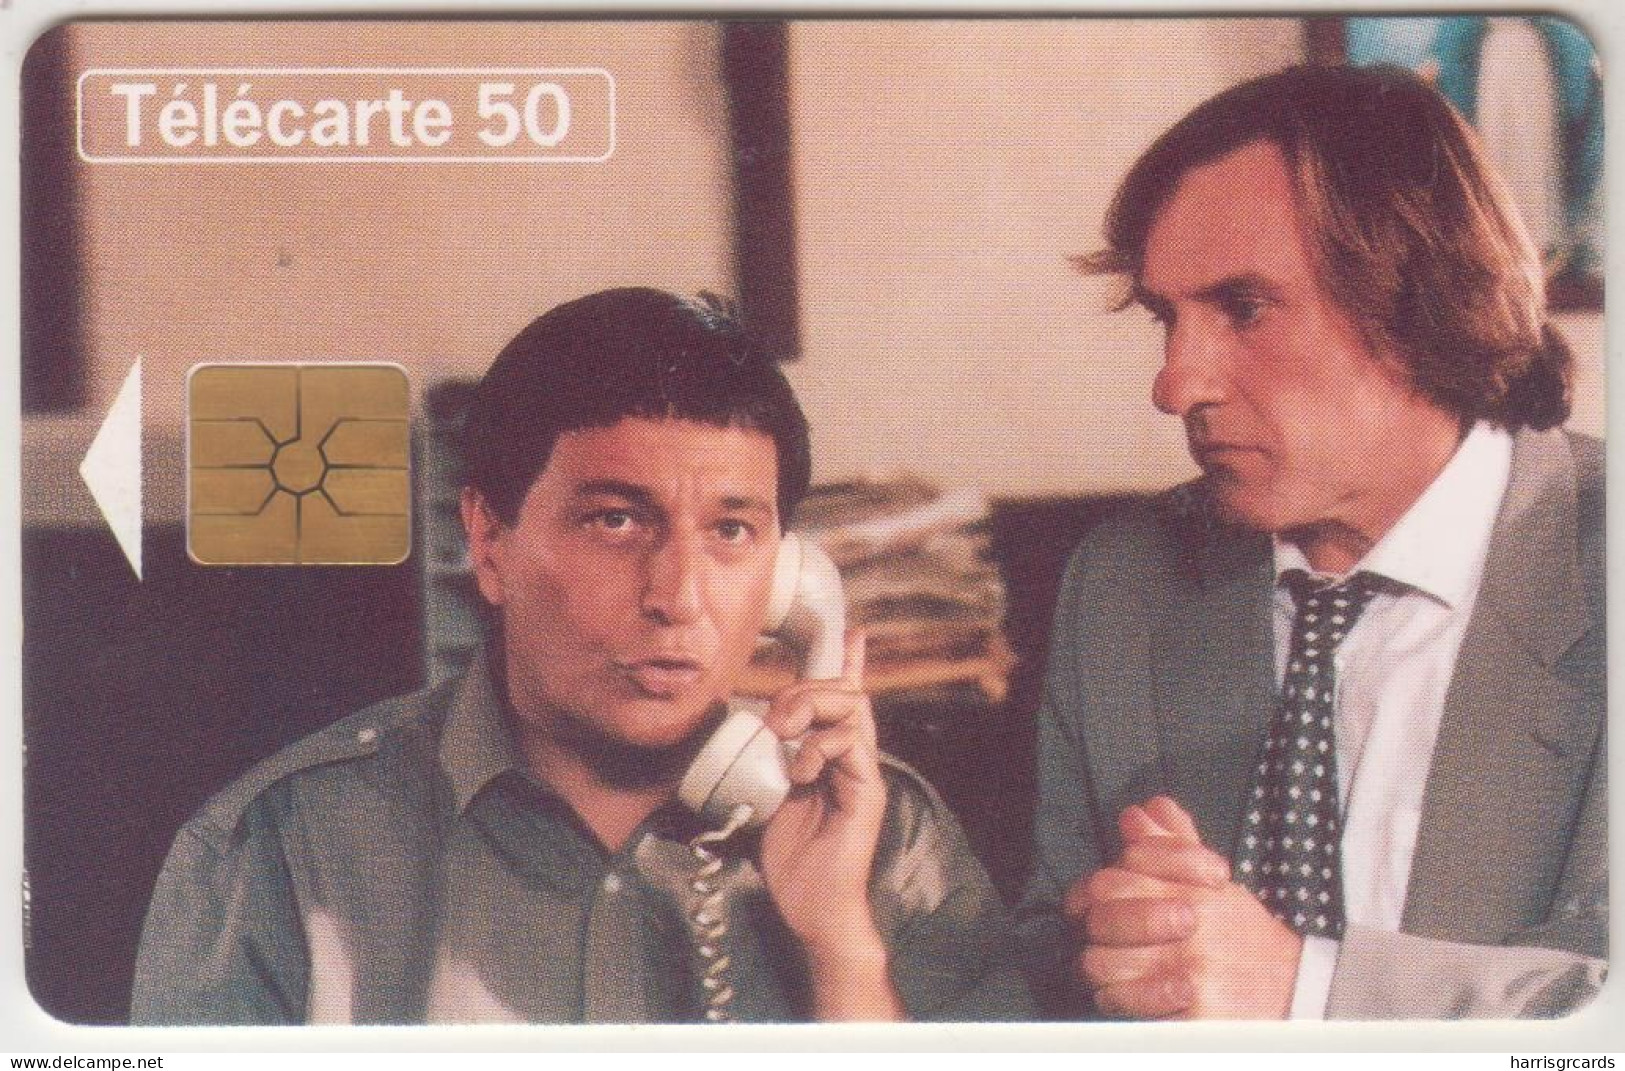 FRANCE - Telephone Et Cinema N.9 - Clavier & Depardieu, Chip:GEM1B (Not Symmetric White/Gold), 50 U, 10/95, Used - 1995